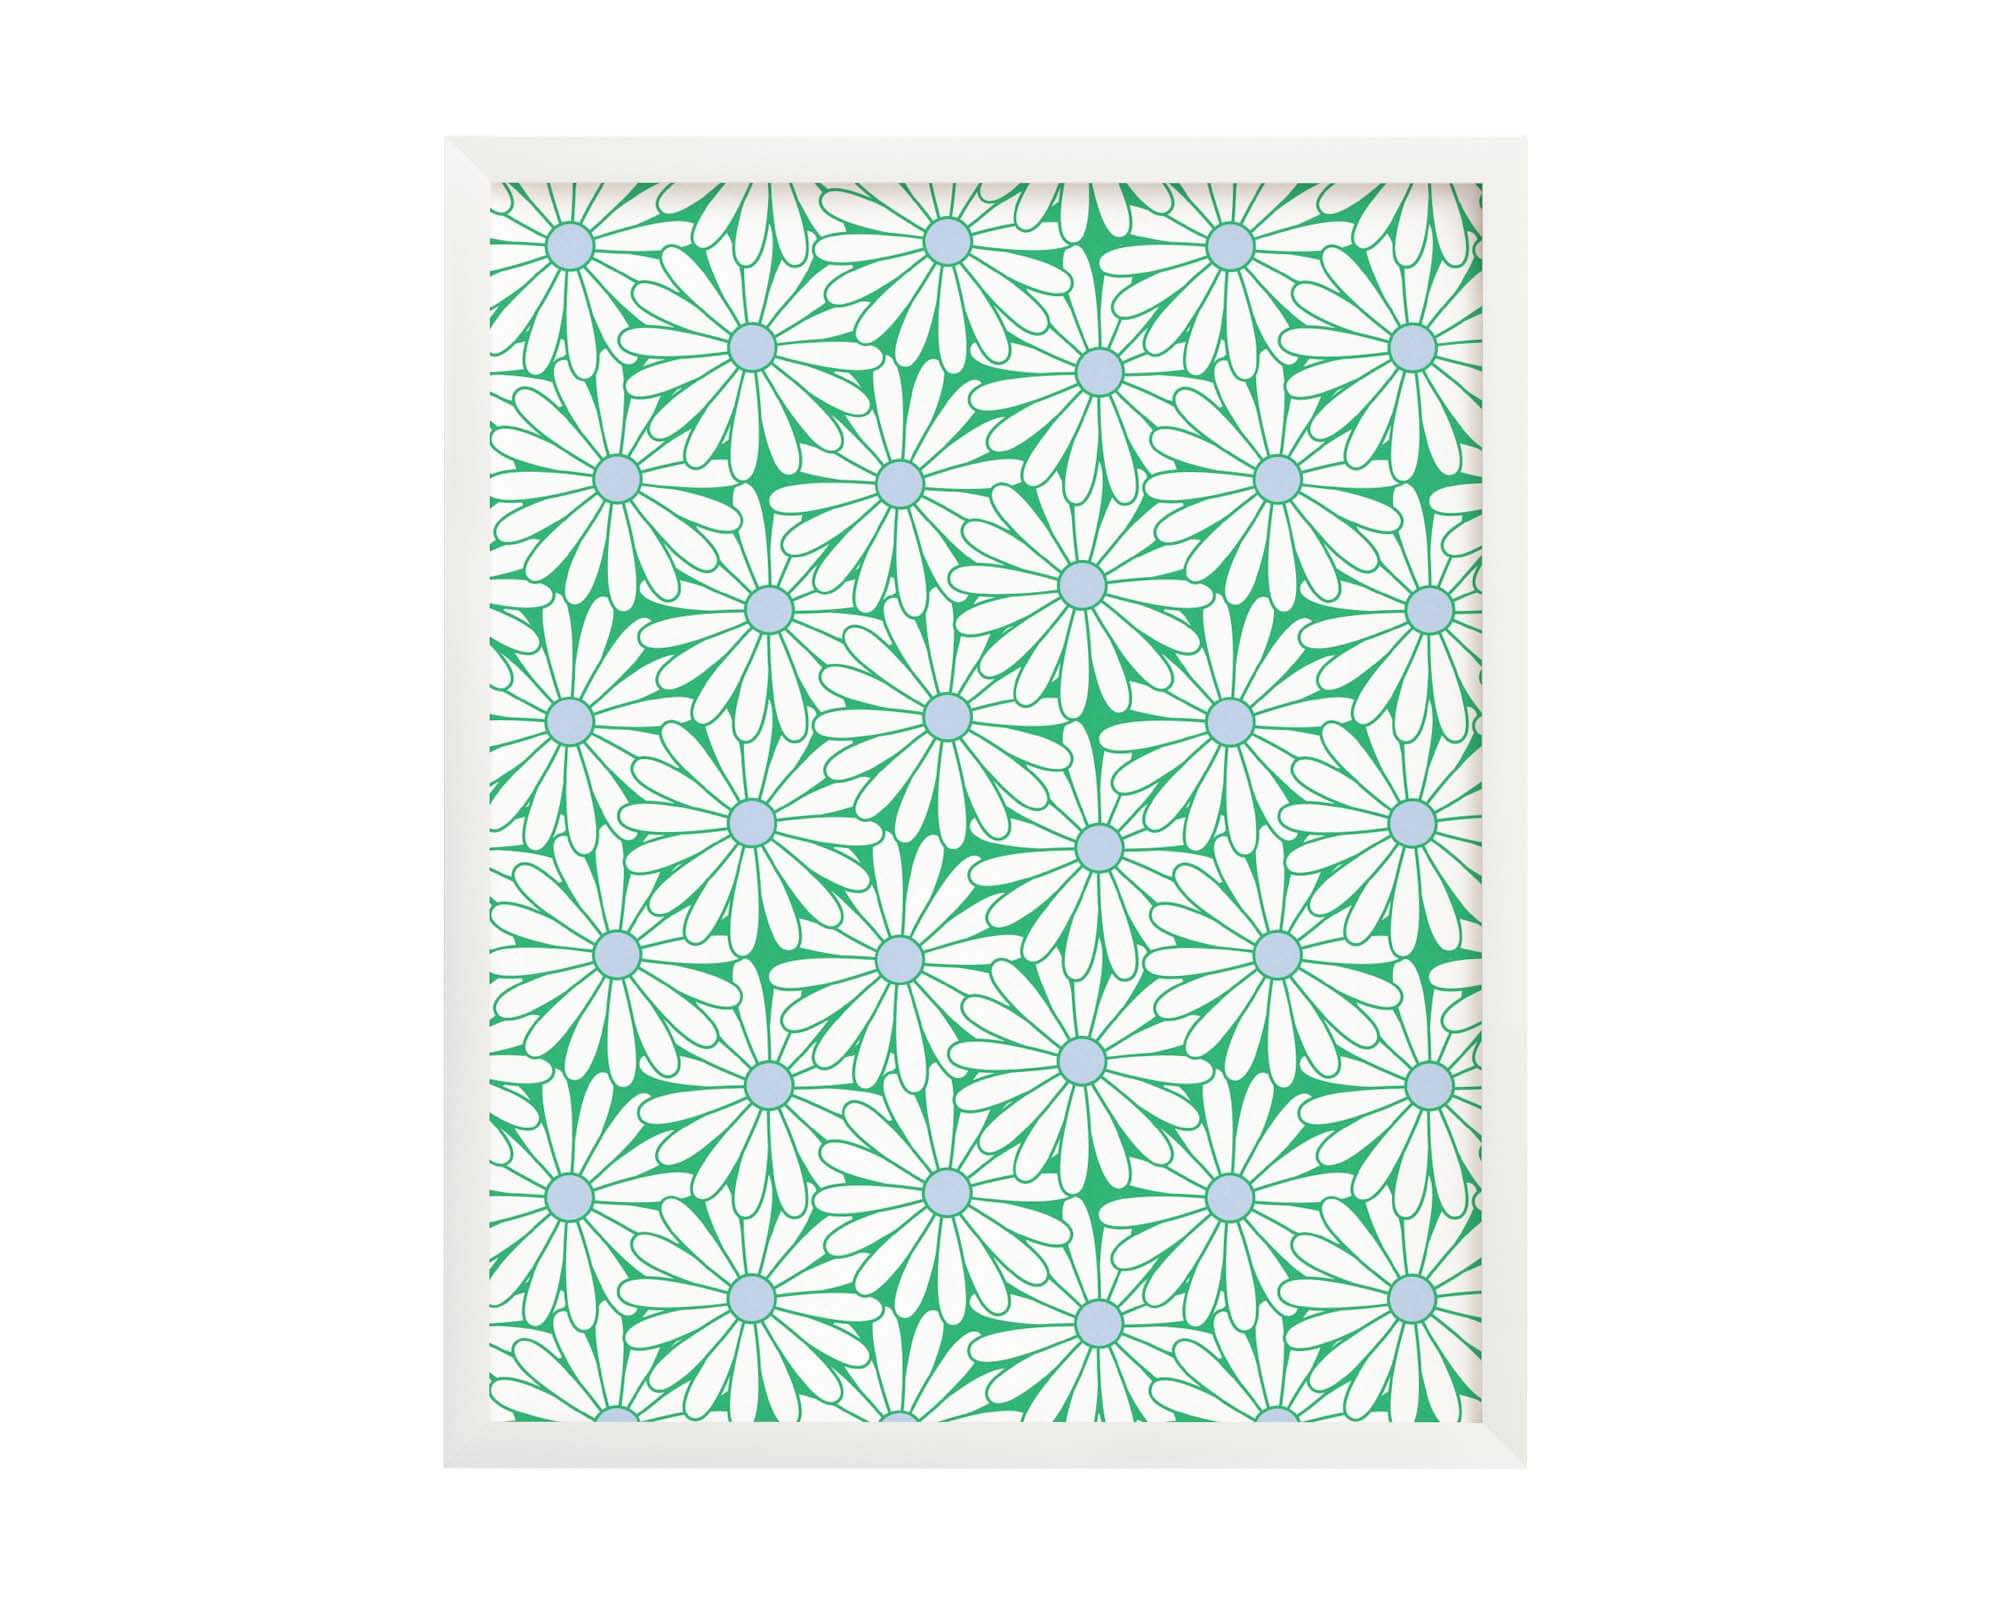 "Daisy Love" green & blue daisy pattern archival giclée art print. Made in USA by My Darlin' @mydarlin_bk